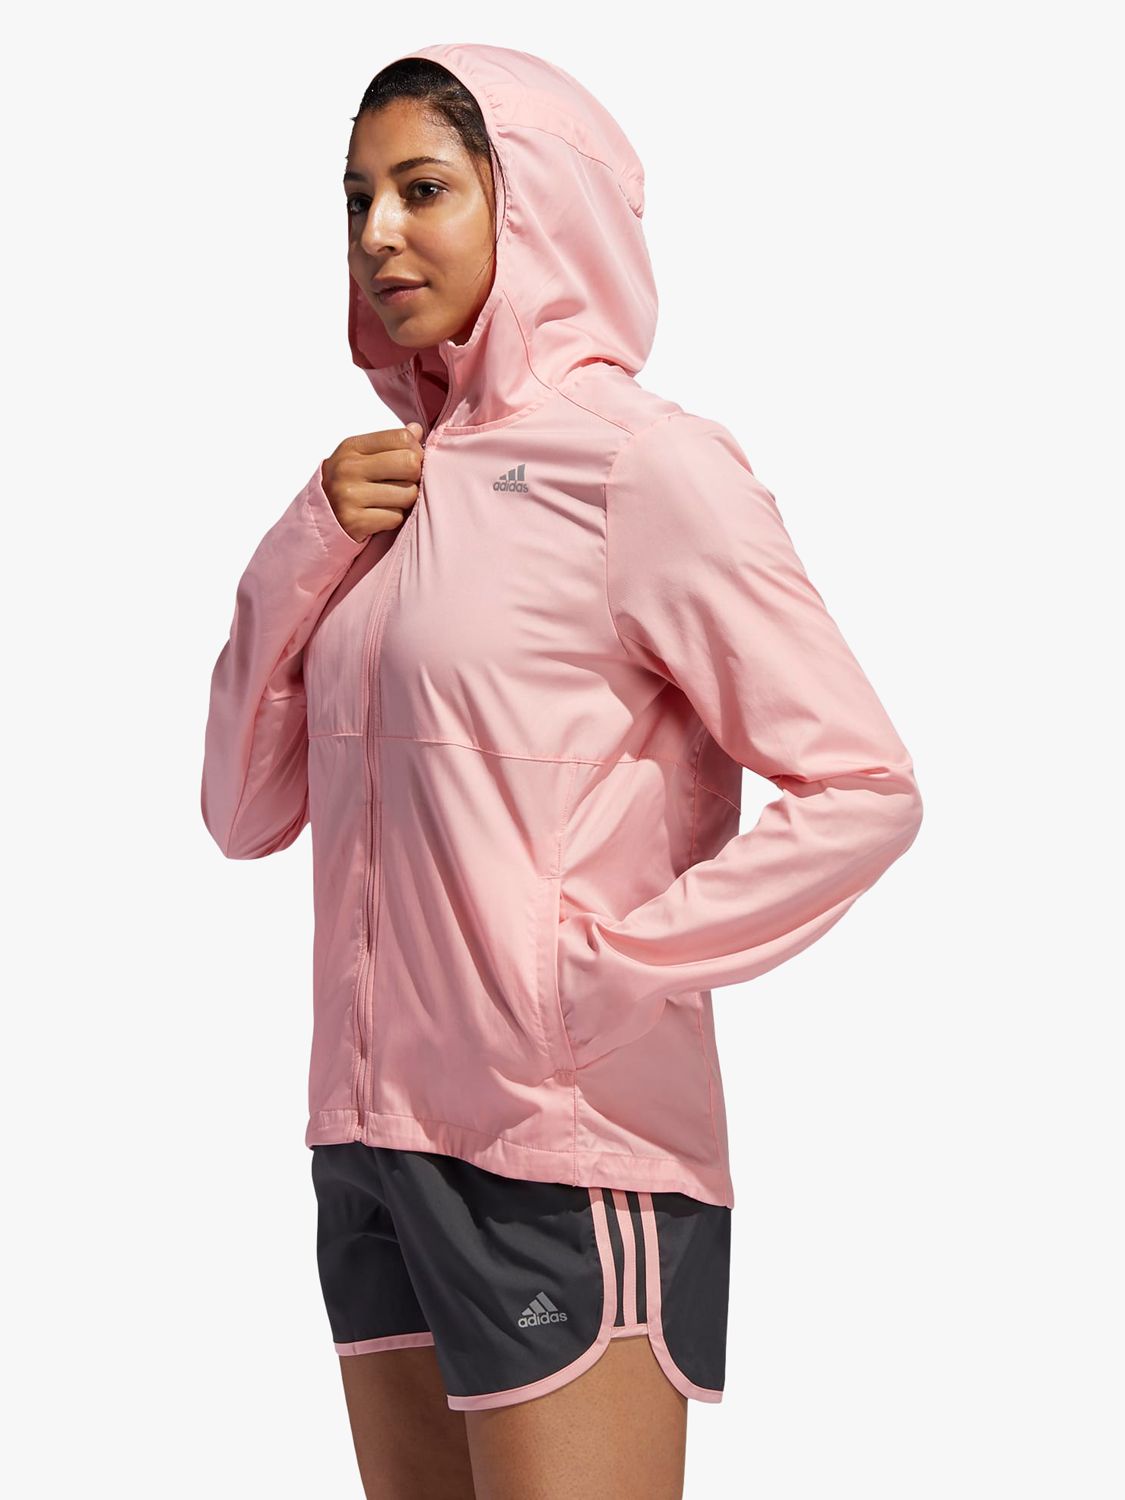 adidas own the run womens jacket